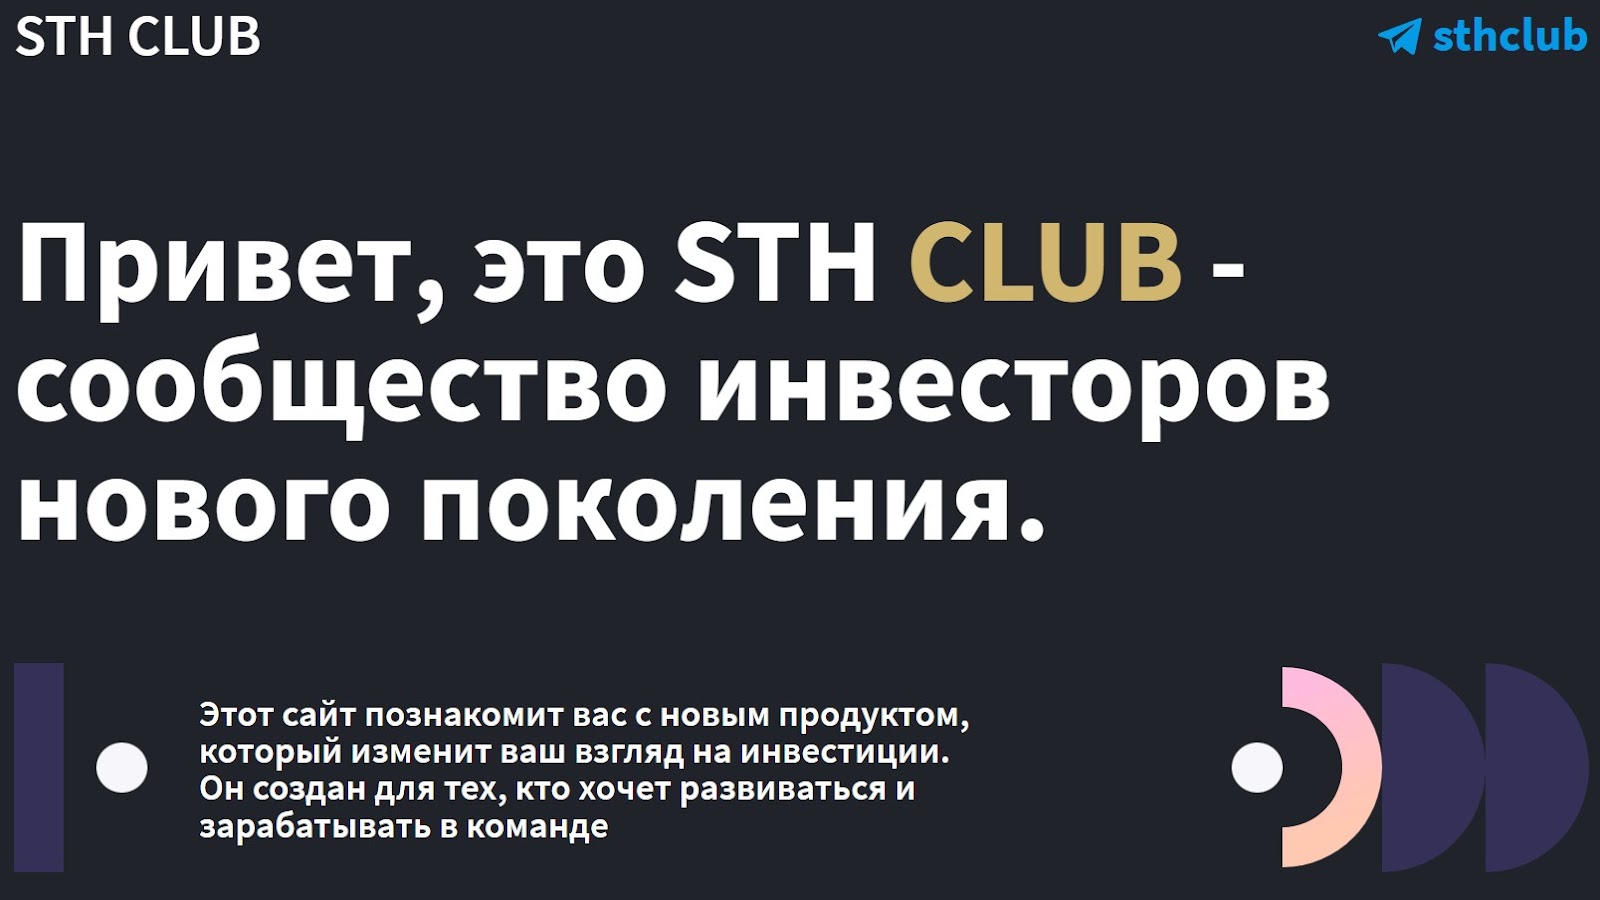 sth club отзывы